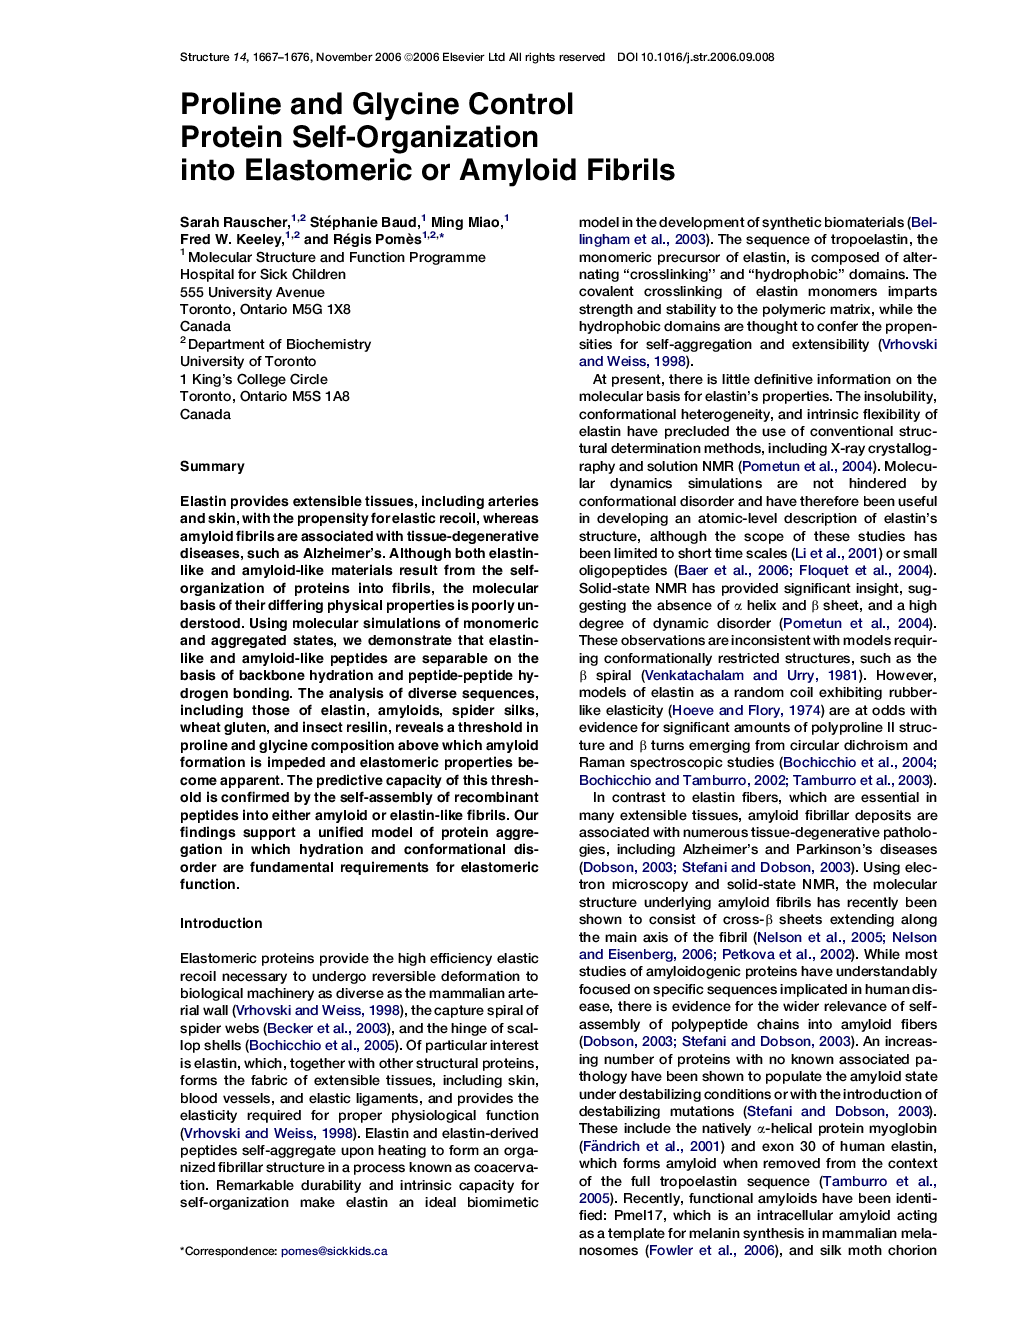 Proline and Glycine Control Protein Self-Organization into Elastomeric or Amyloid Fibrils